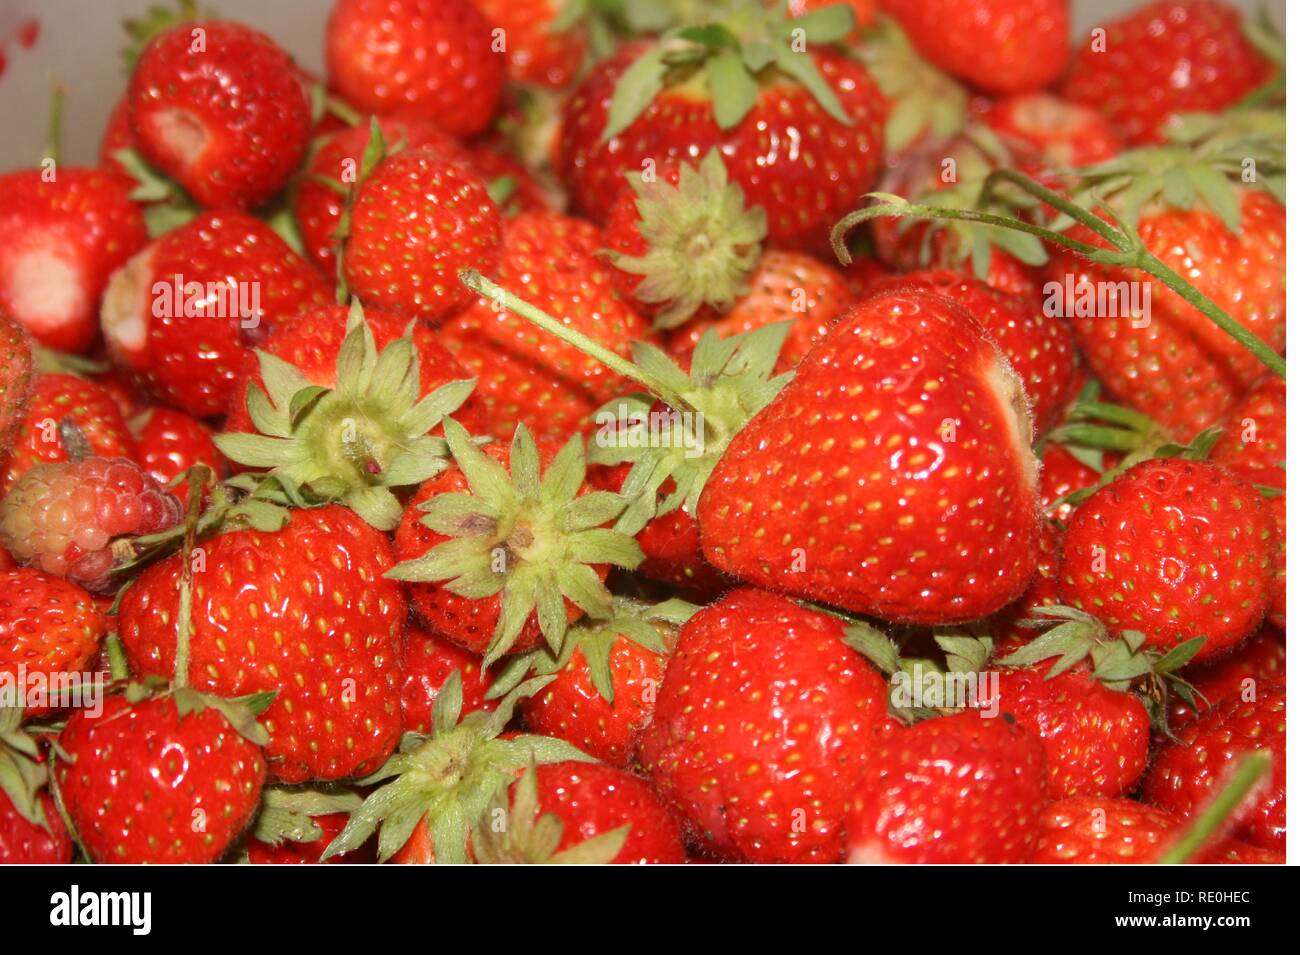 A Bowlful of Strawberries Stock Photo